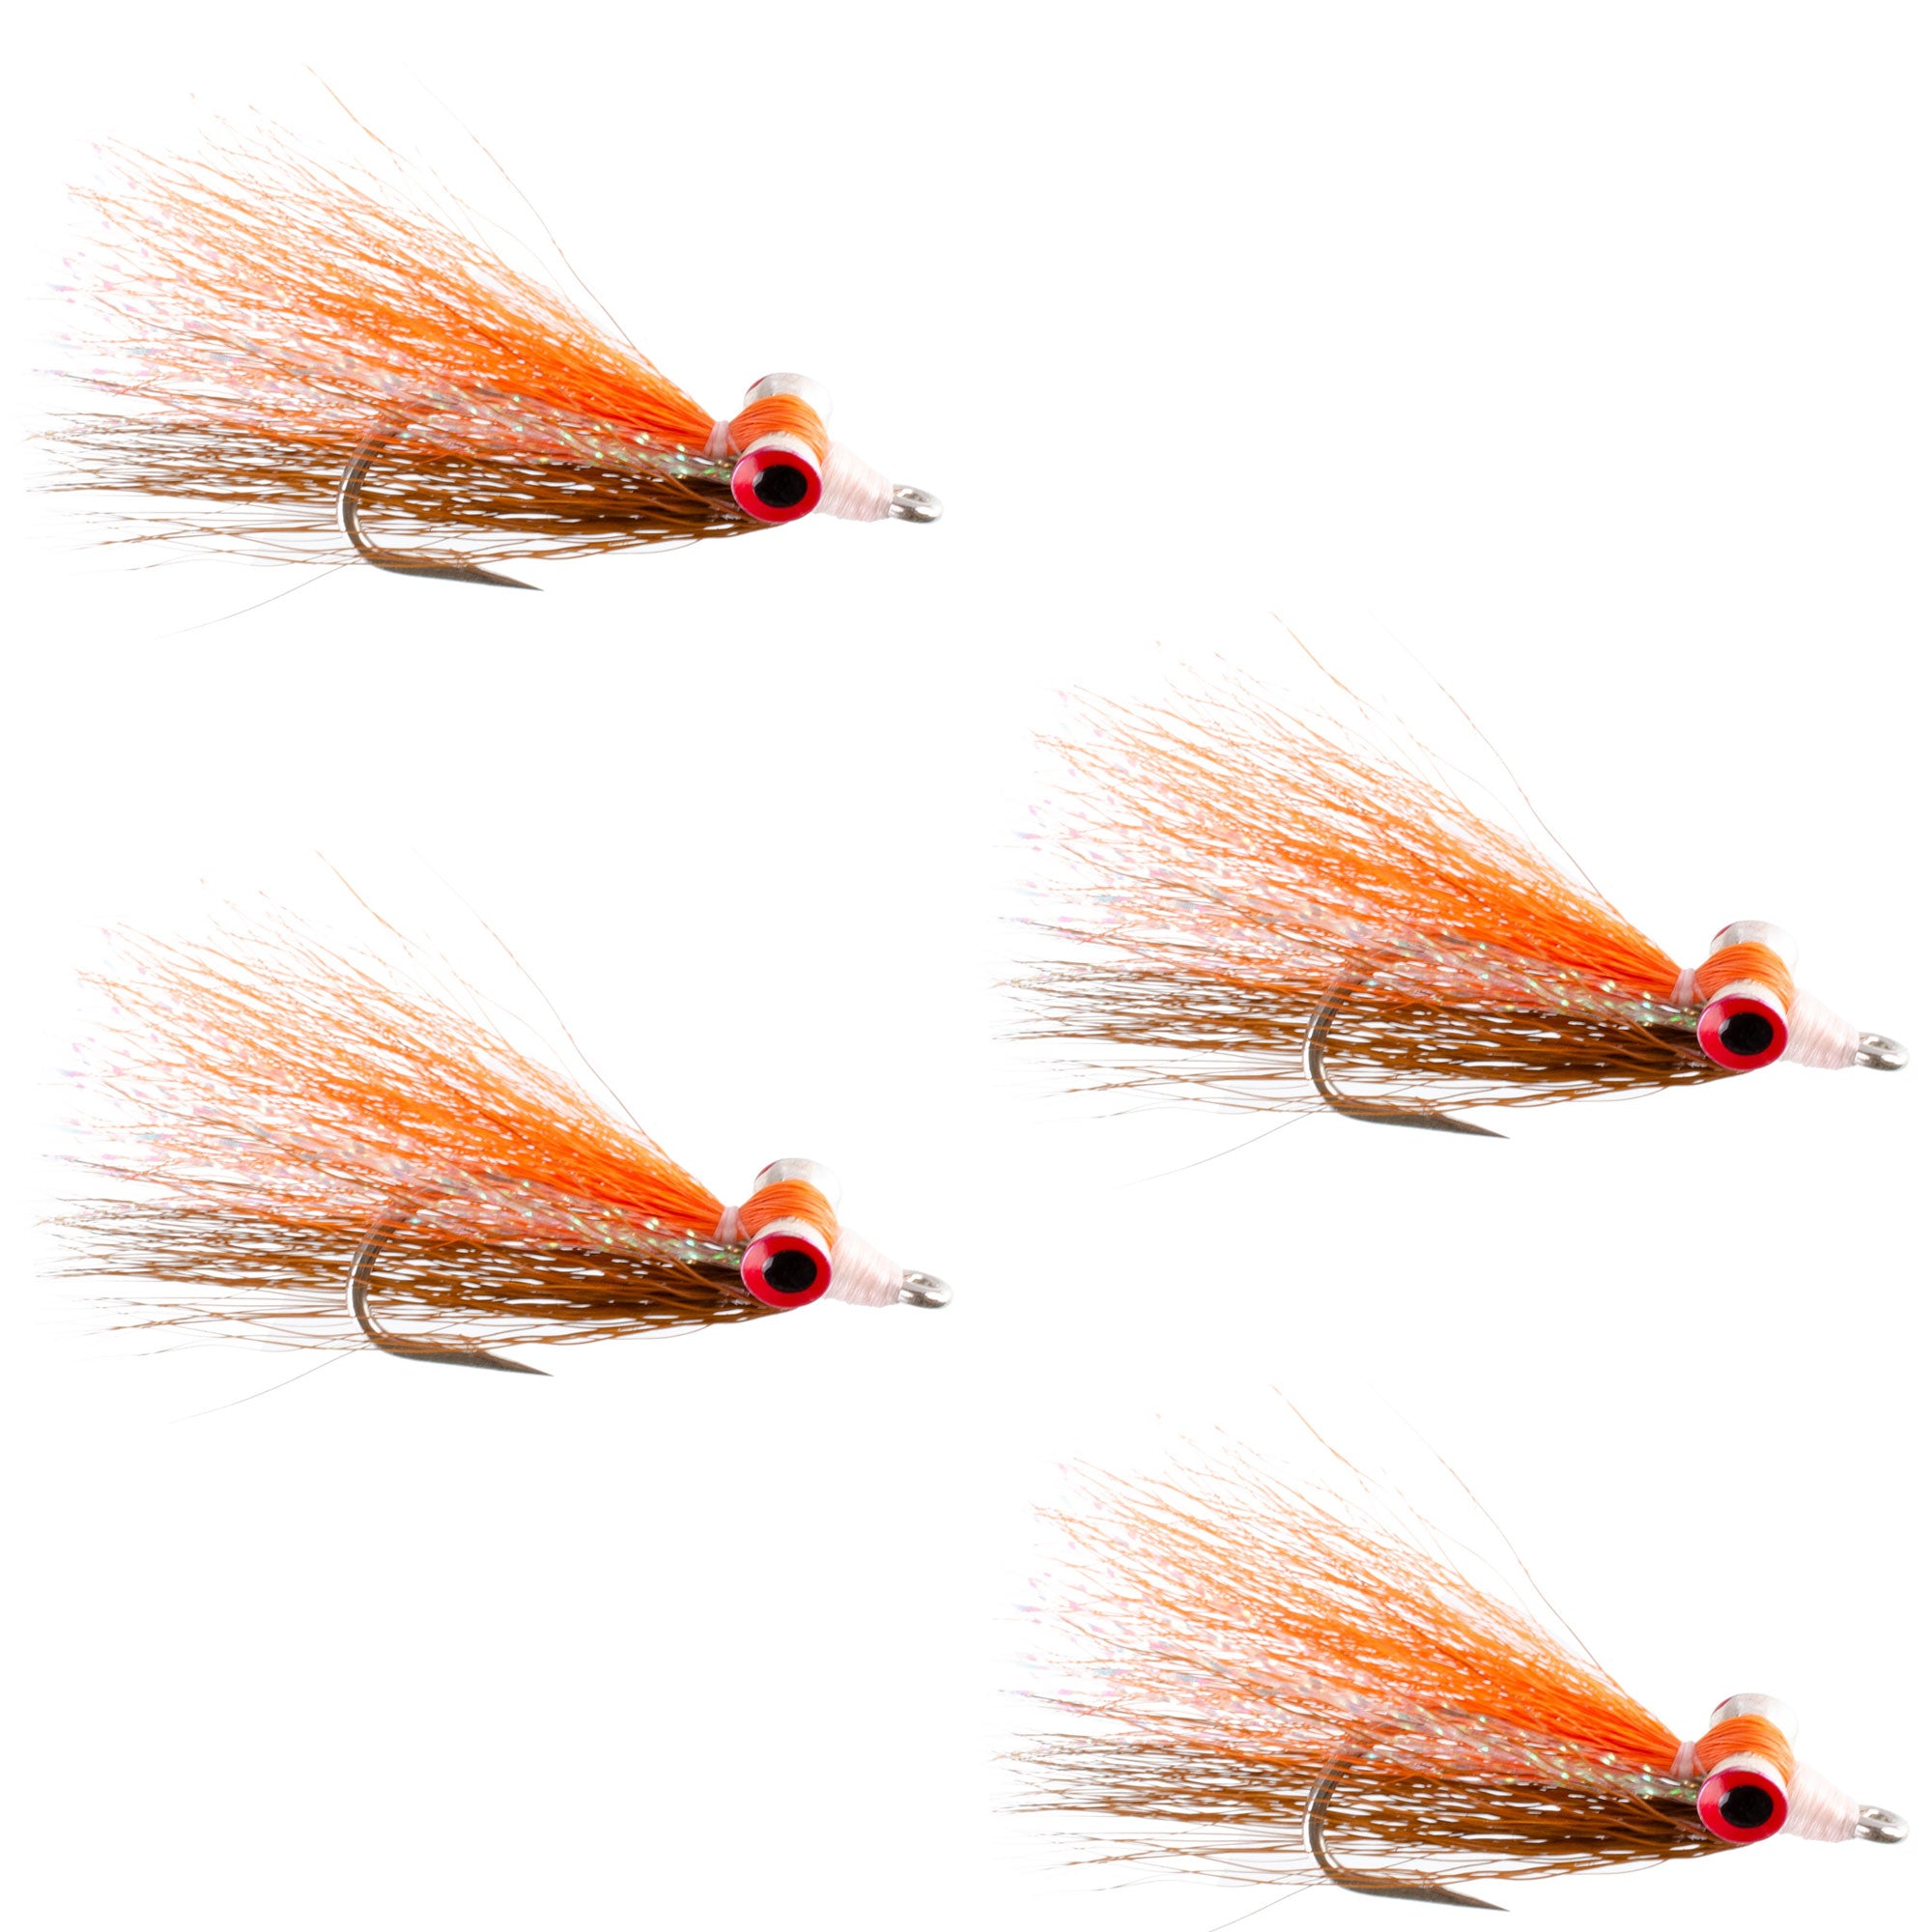 Clousers Deep Minnow Brown Orange Sunfish - Moscas de pesca con mosca Streamer - 4 moscas de agua salada y lubina - Tamaño del anzuelo 1/0 